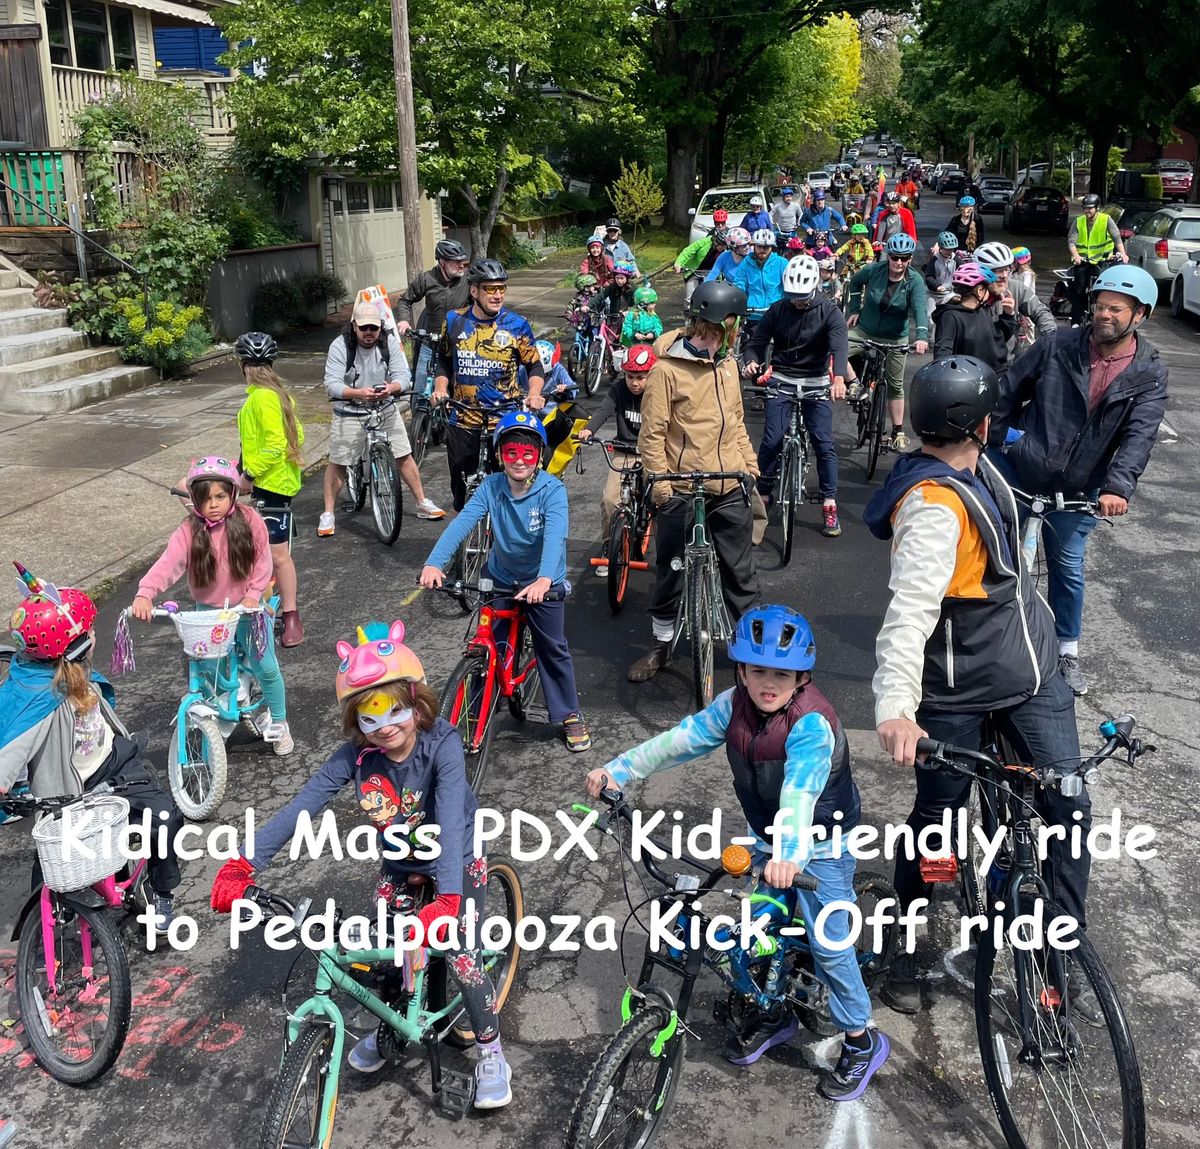 Kid Friendly Bike Ride to Pedalpalooza Kick-Off Ride - Kidical Mass PDX